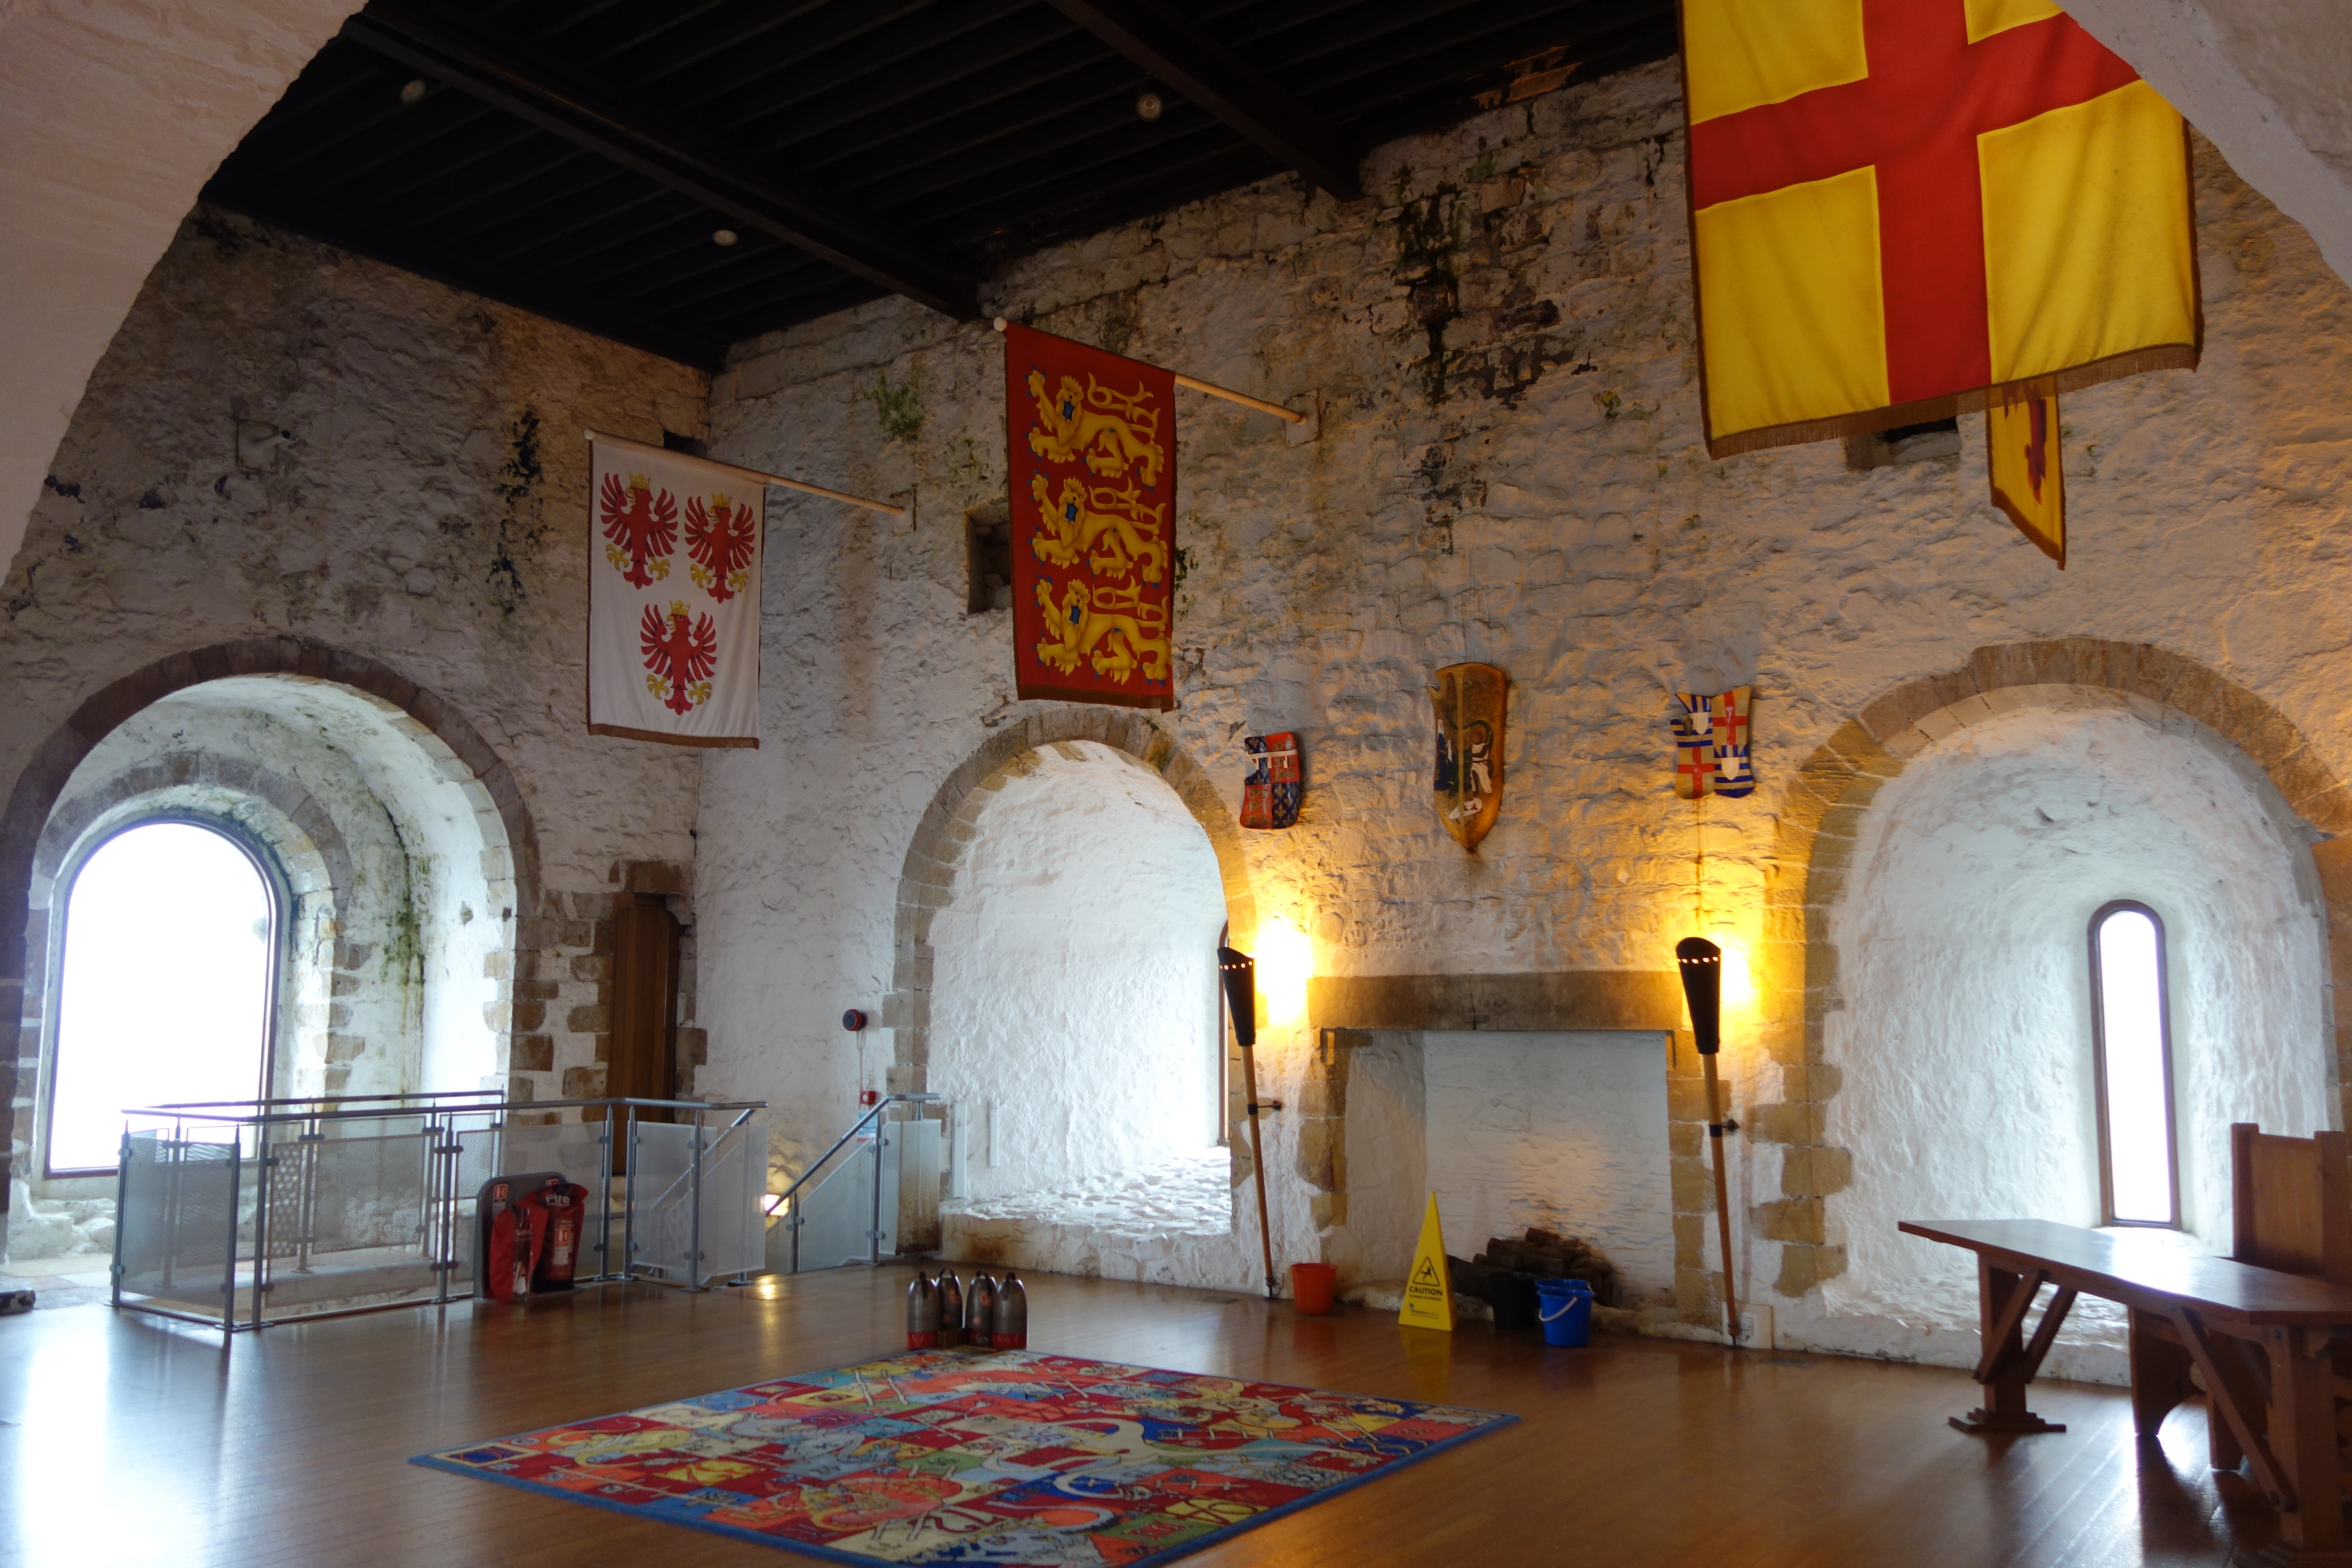 Interior of Carrickfergus Castle. Photo taken on July 30, 2014.